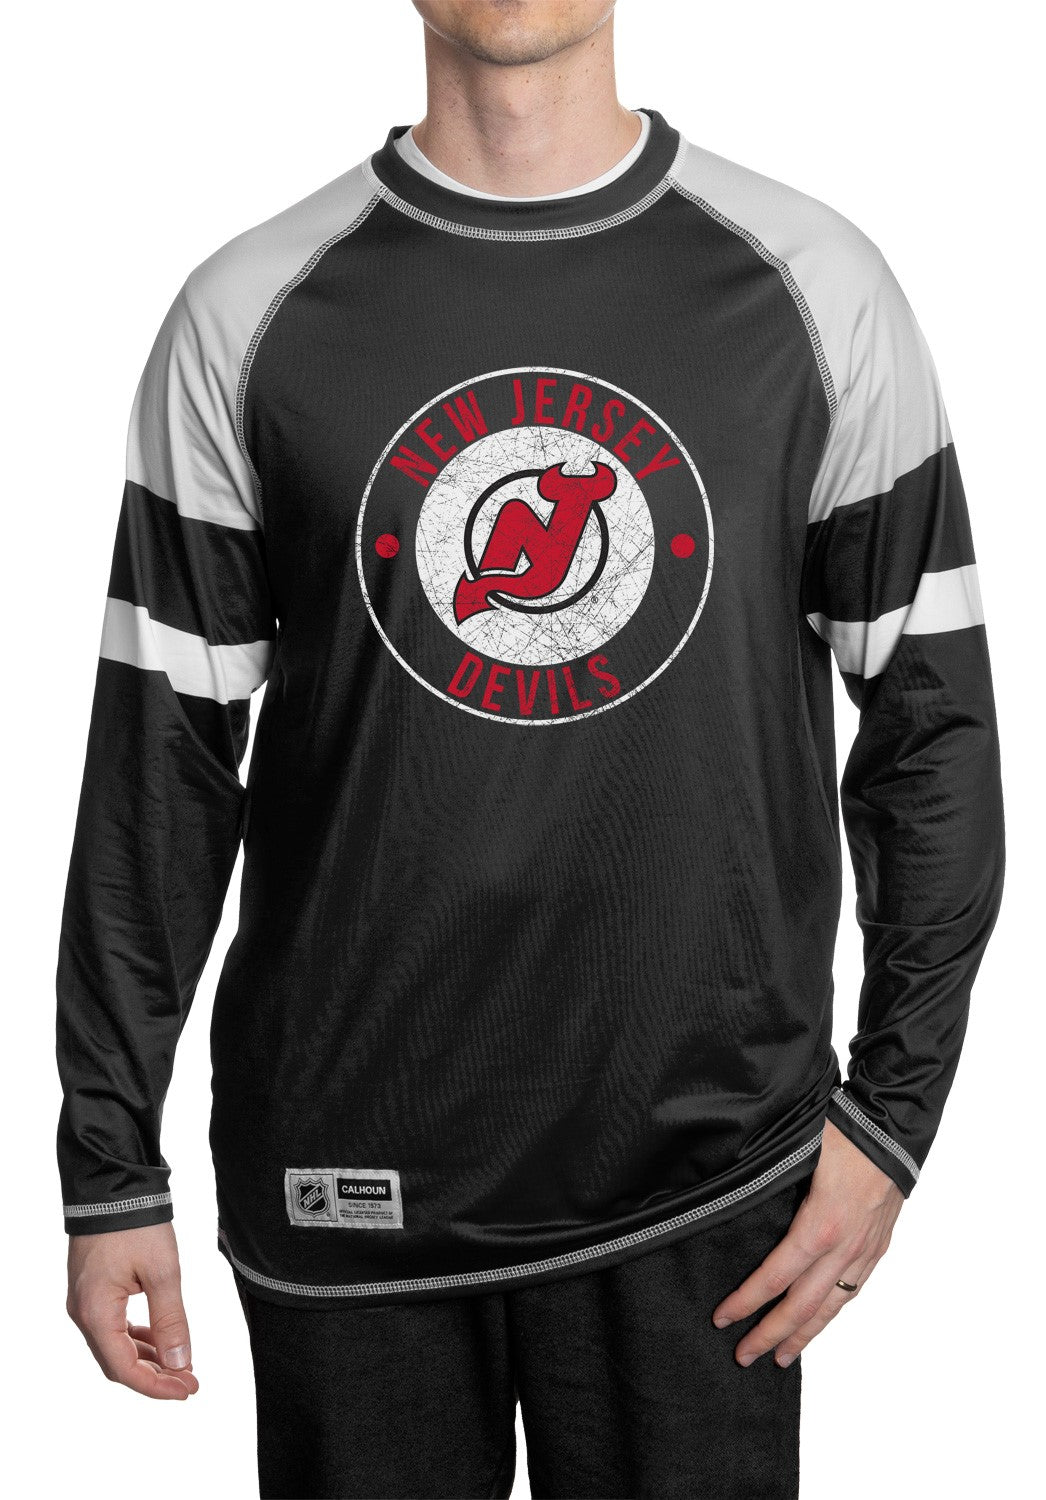 New Jersey Devils Thermal Long Sleeve Rash Guard Shirt